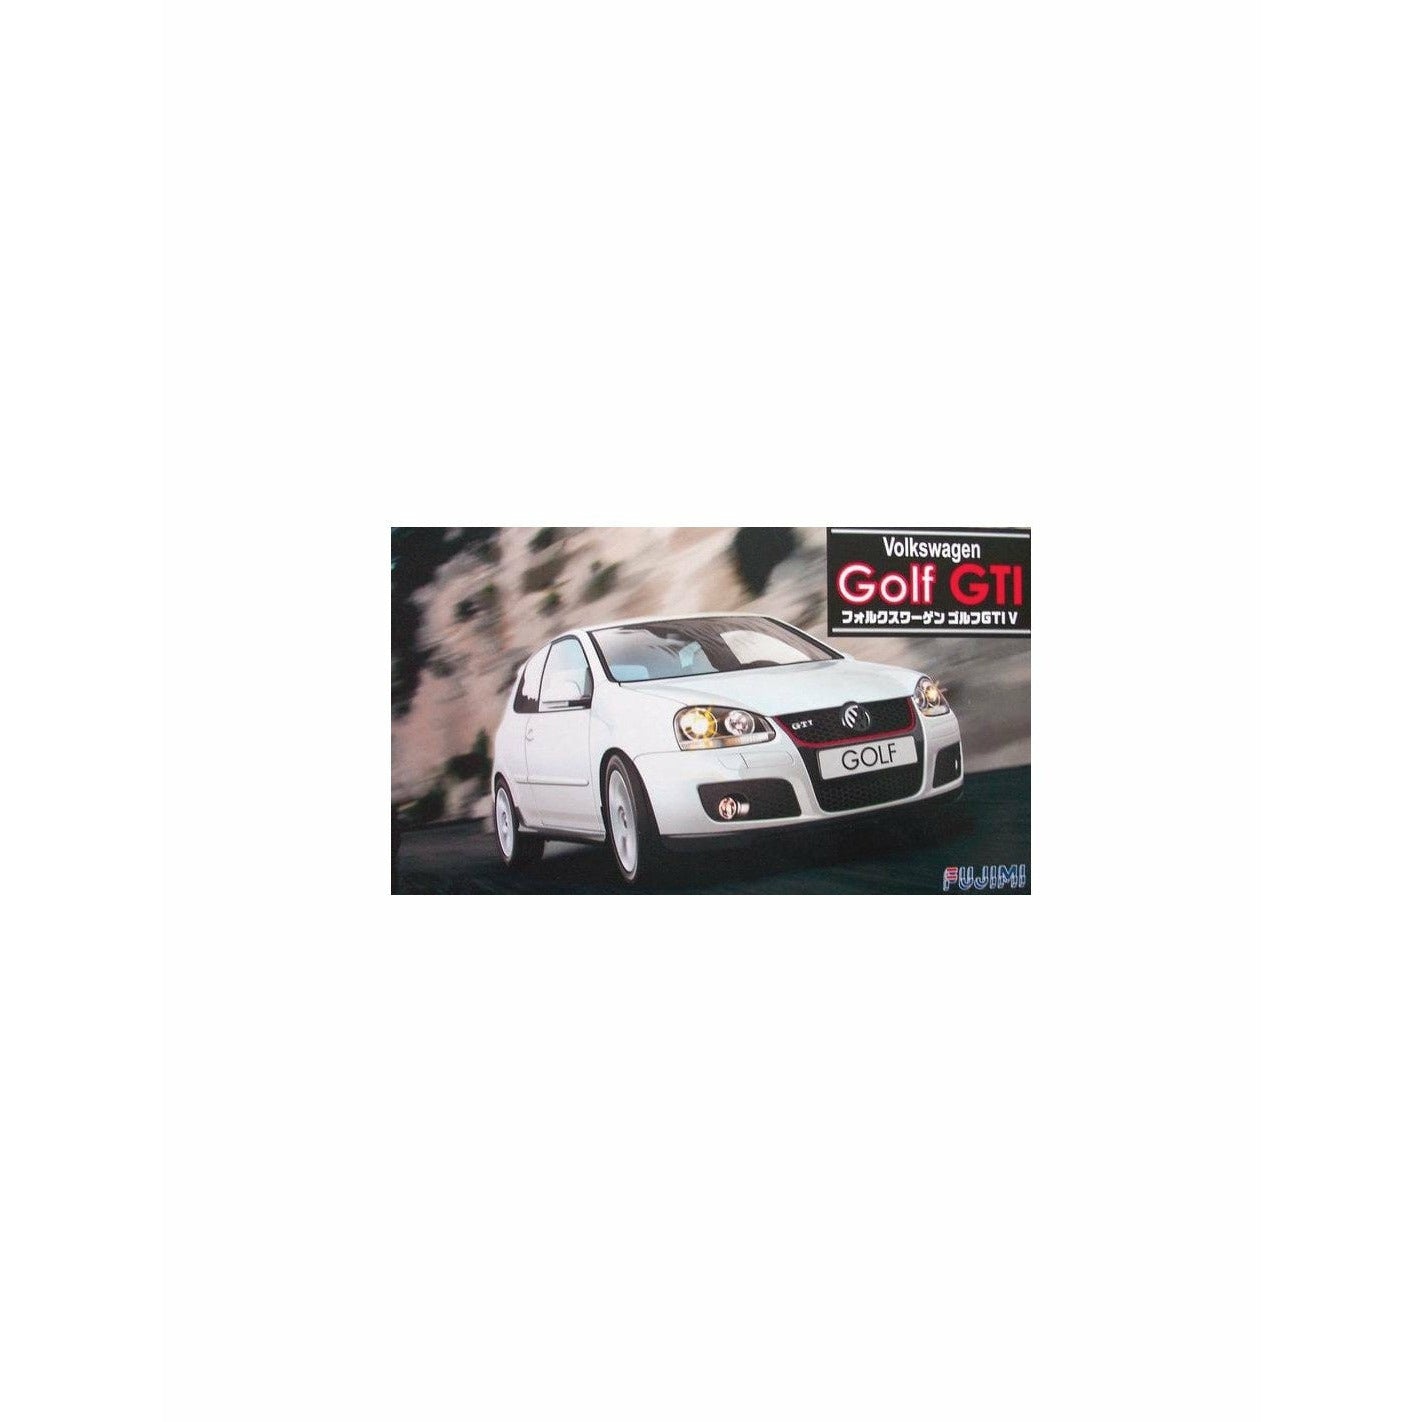 Golf GTI, Fujimi Nr. 123158 - Modellversium Kit-Ecke